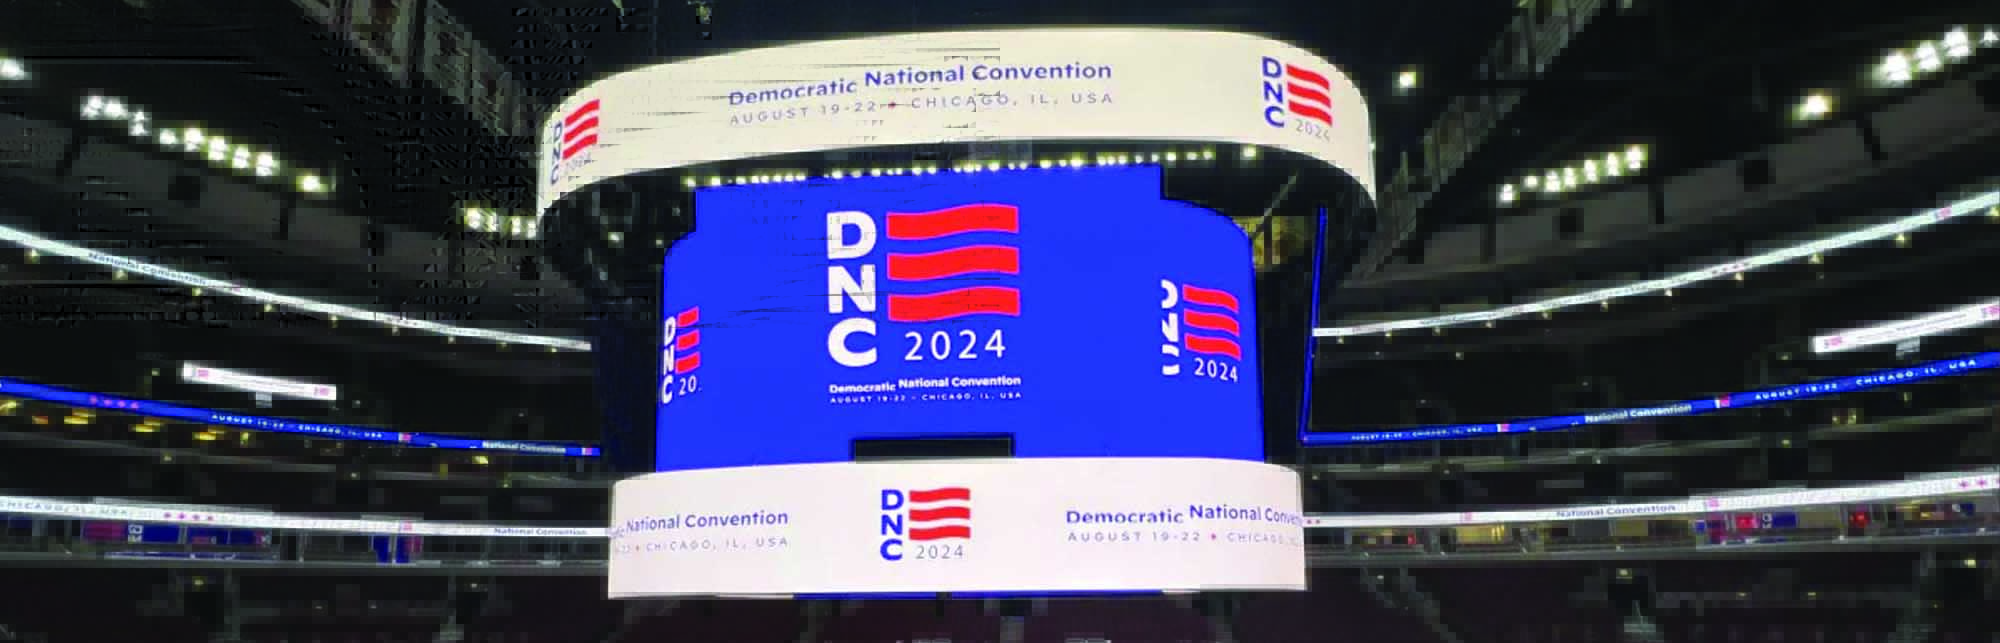 Democratic National Convention in Chicago 2024| Adelines Sea Moose